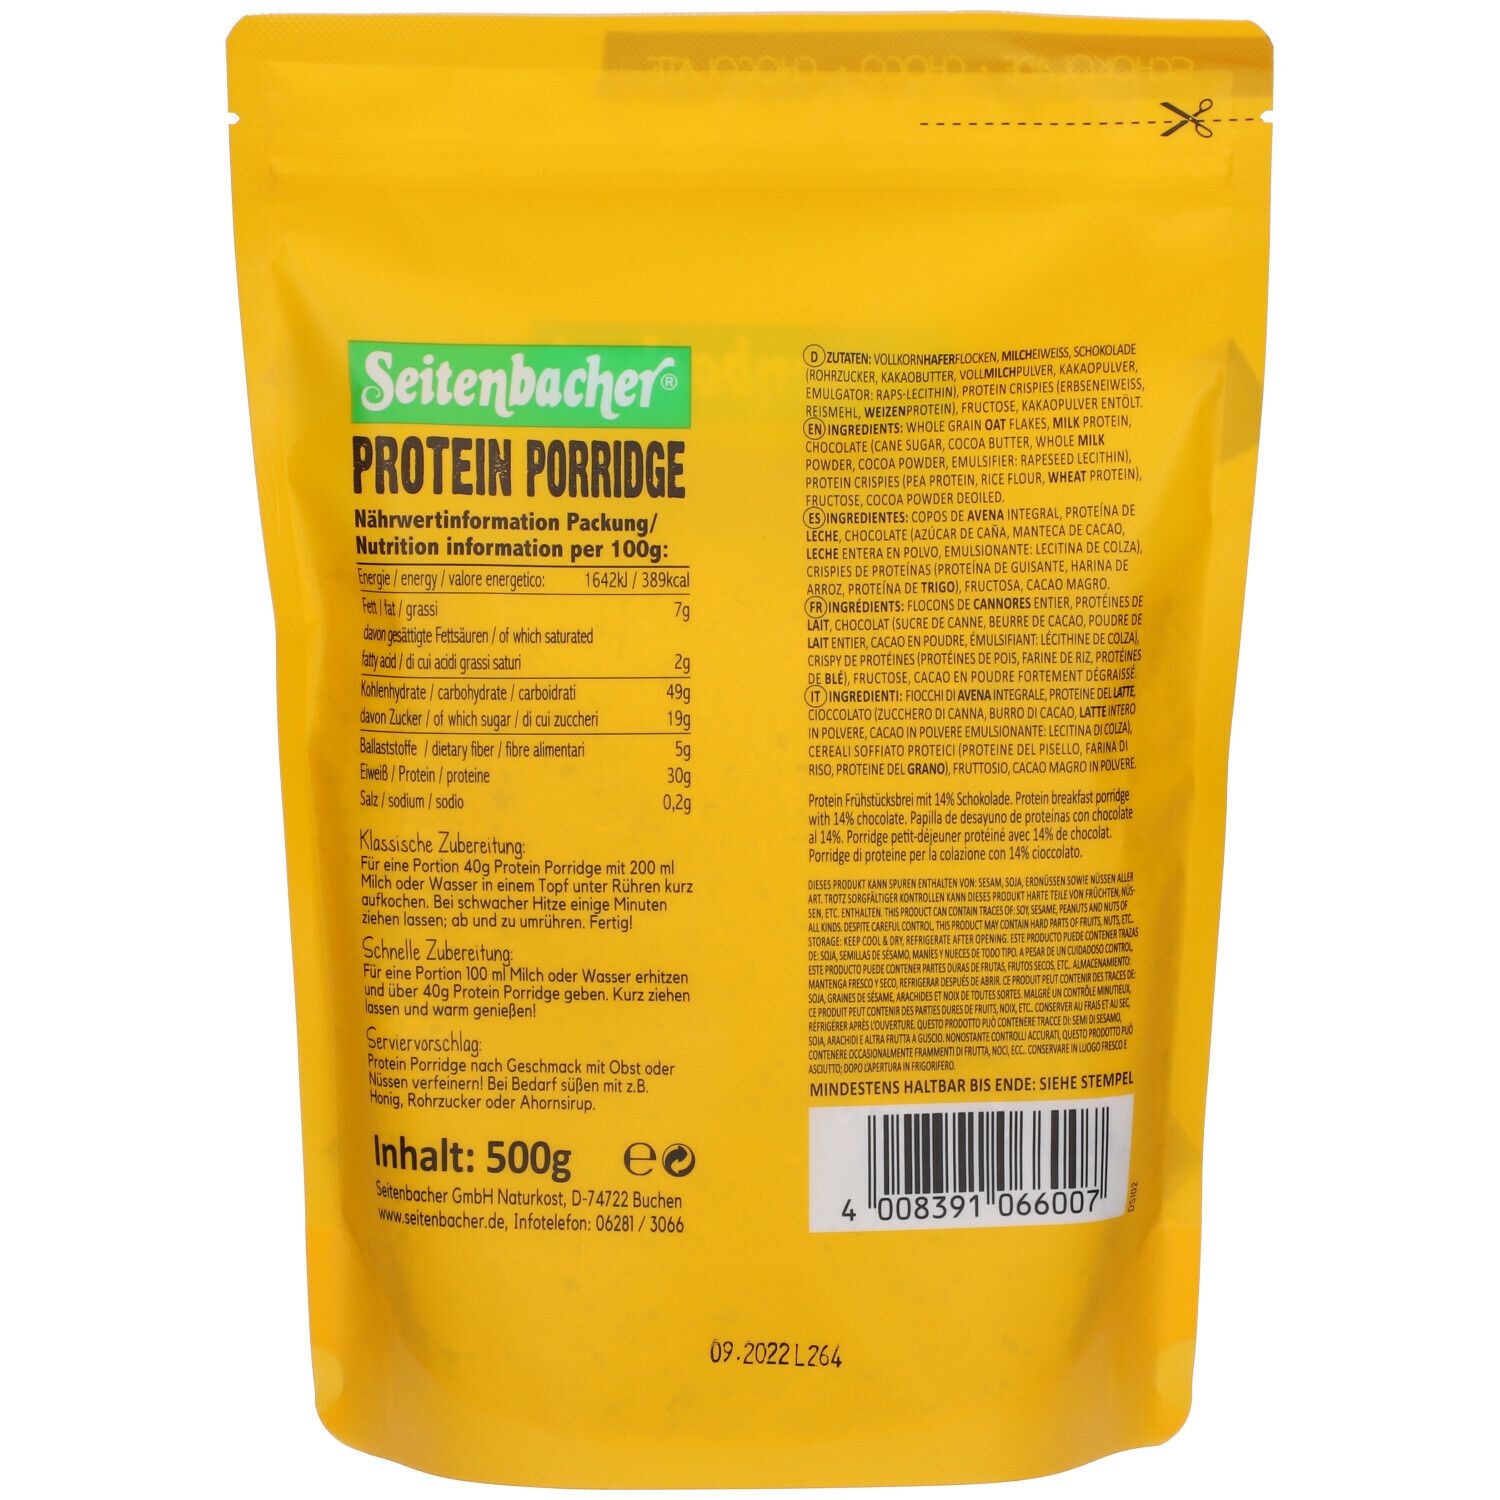 Seitenbacher® Protein Porridge Schokolade